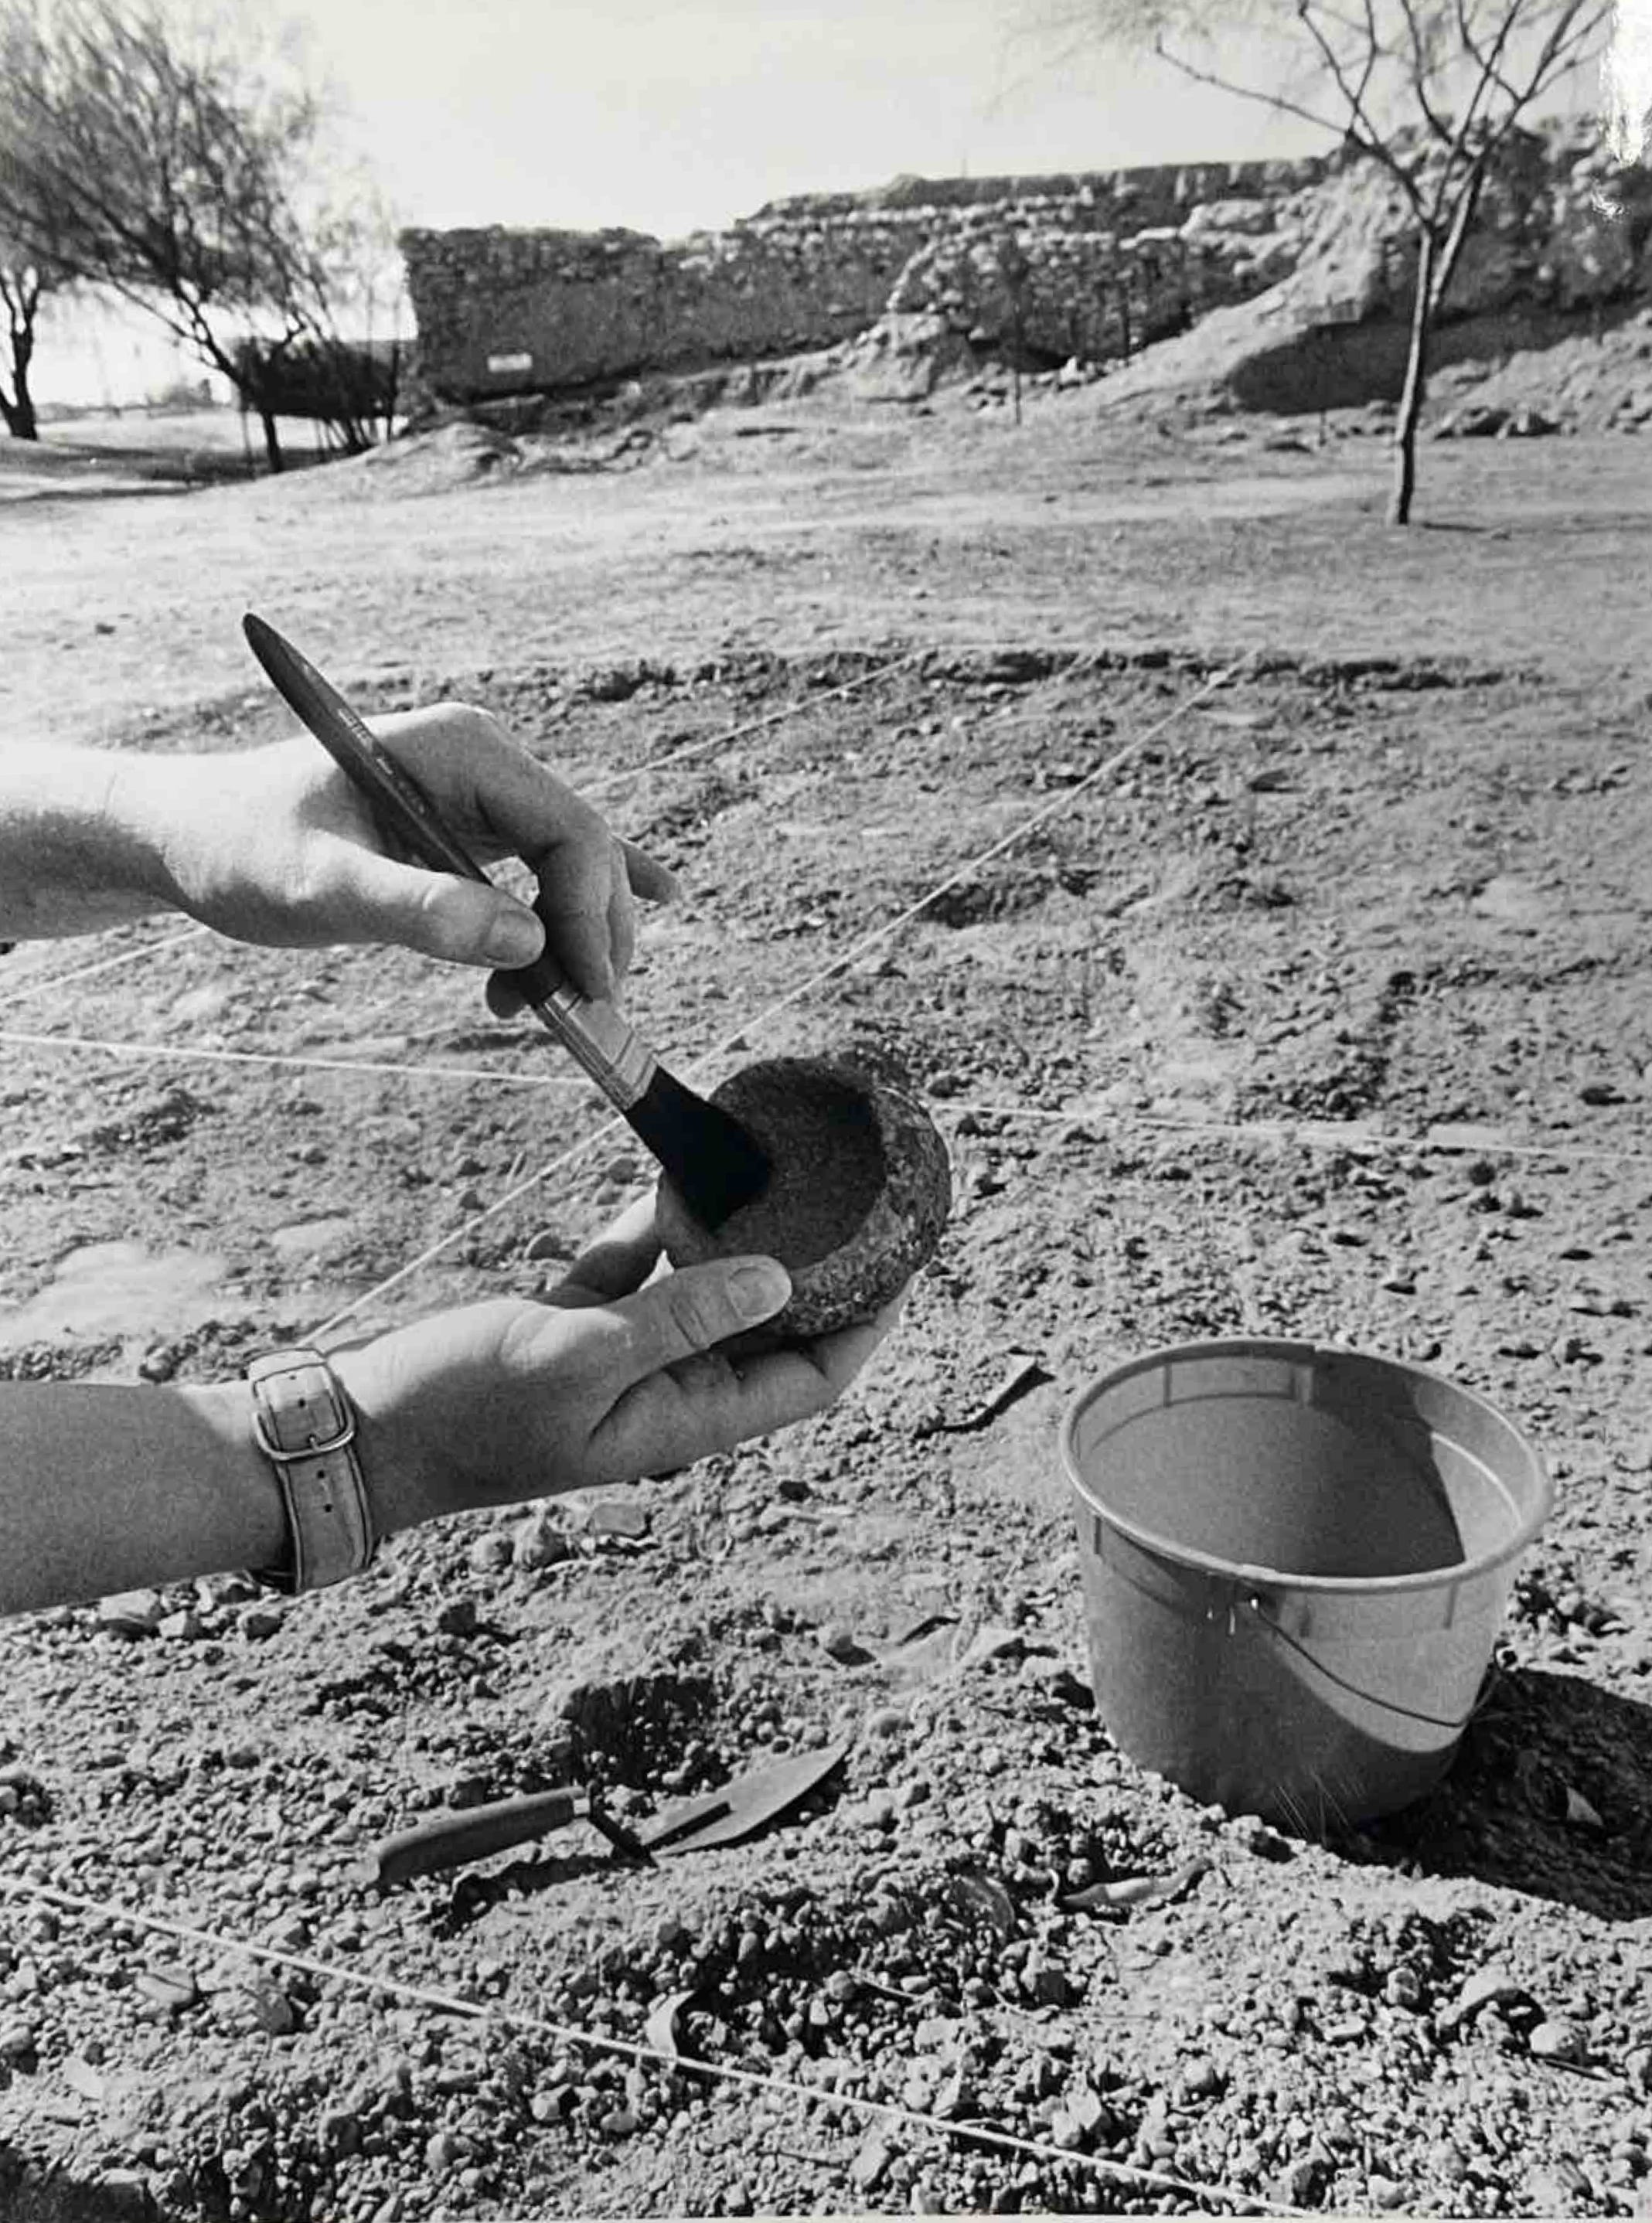 A worker dusts an artifact found at Pueblo Grande, now called S'edav Va'ak, in December 1988.